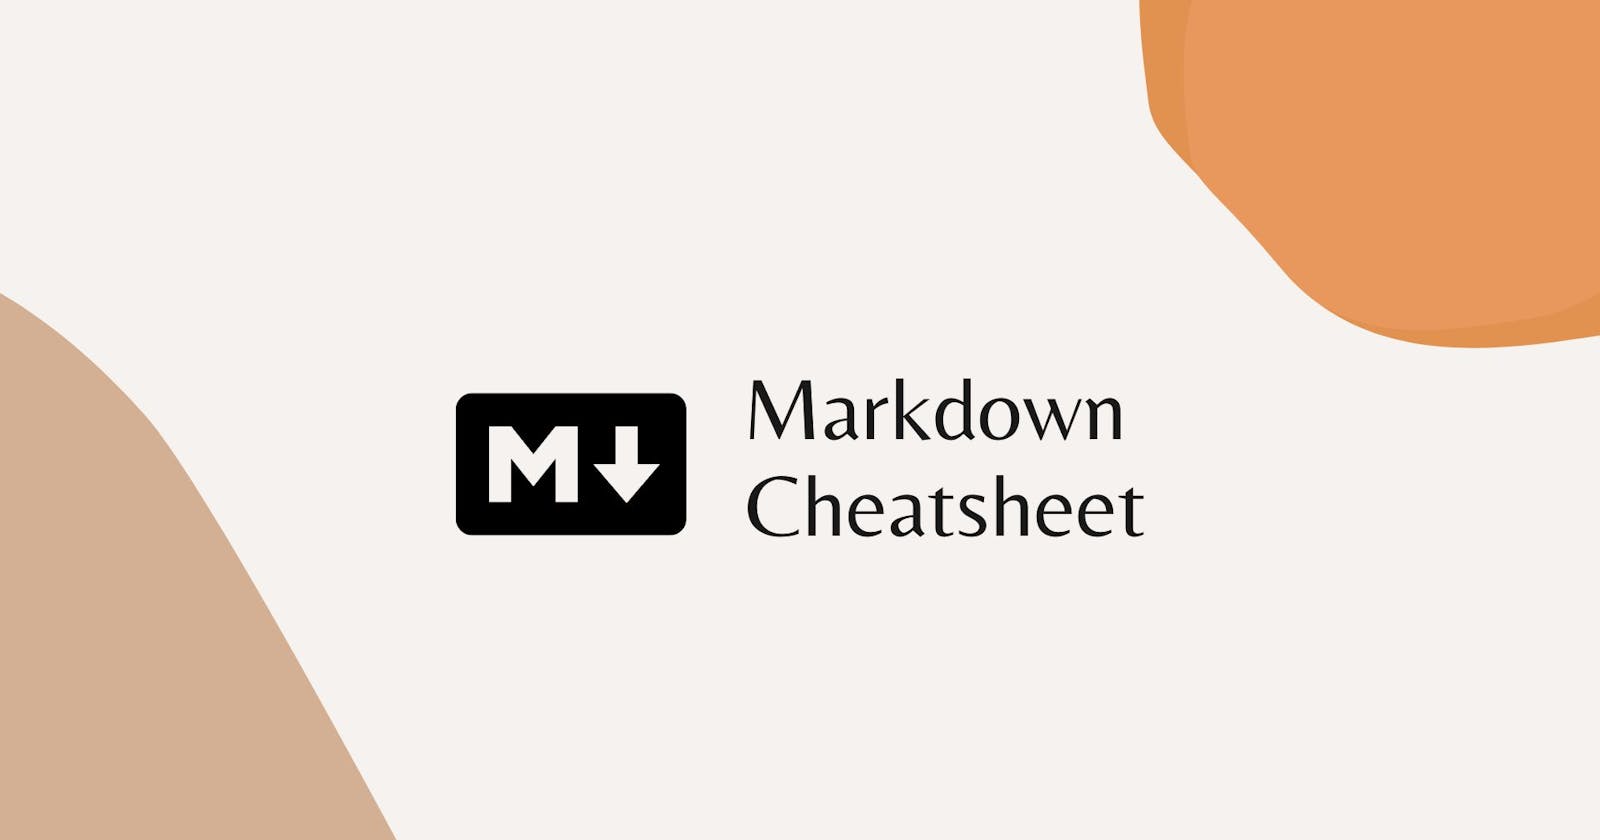 Markdown cheatsheet